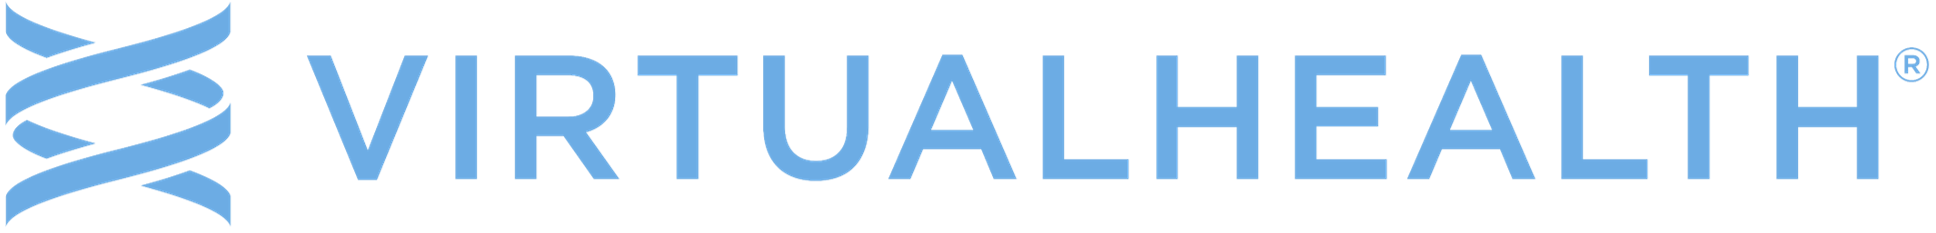 VirtualHealth logo